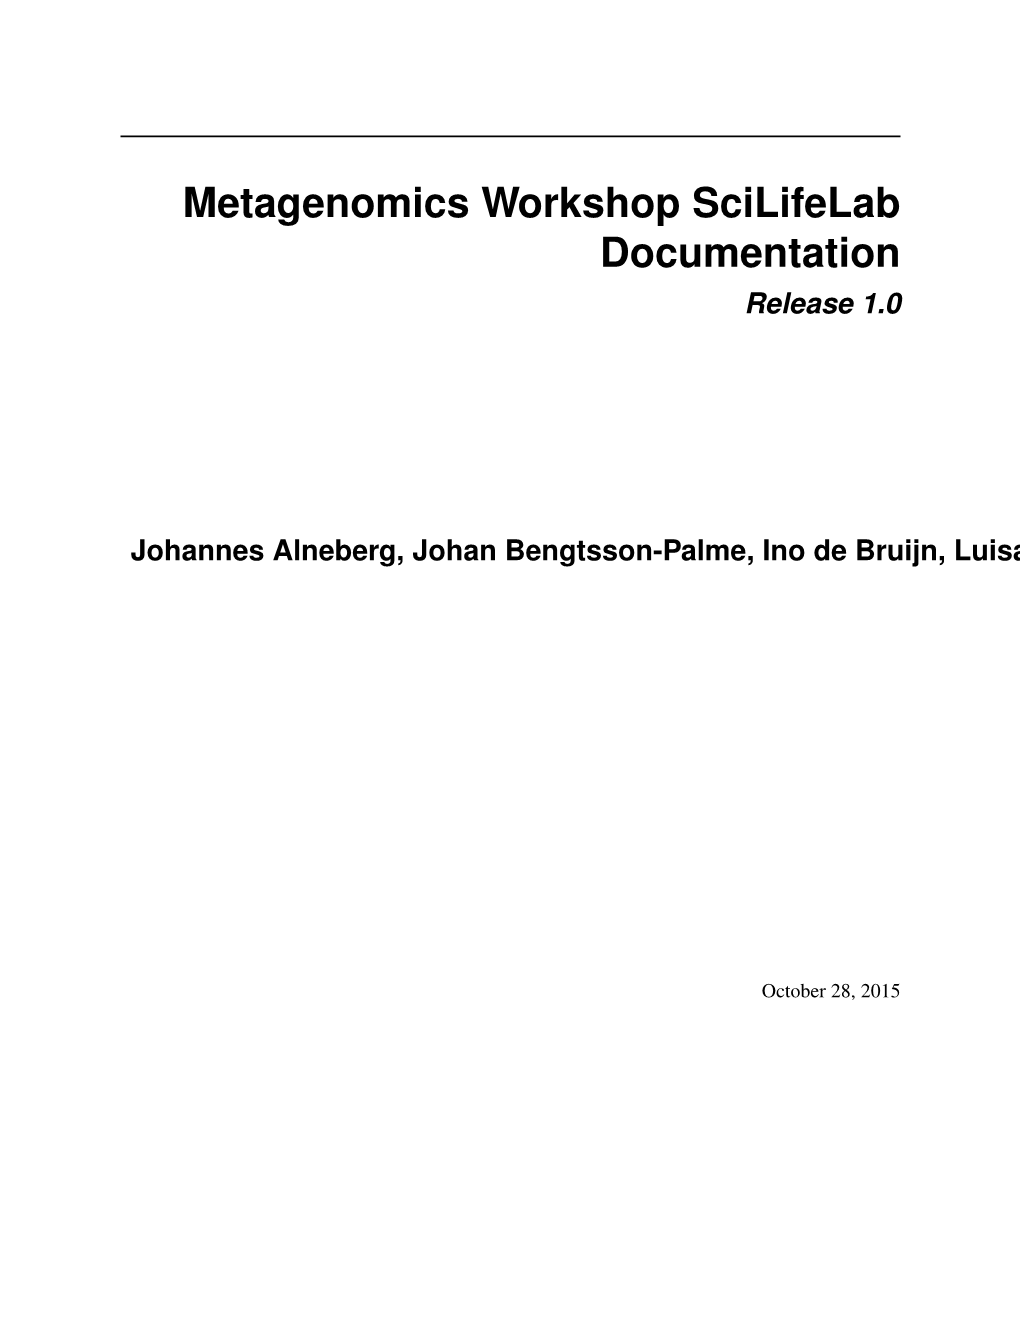 Metagenomics Workshop Scilifelab Documentation Release 1.0